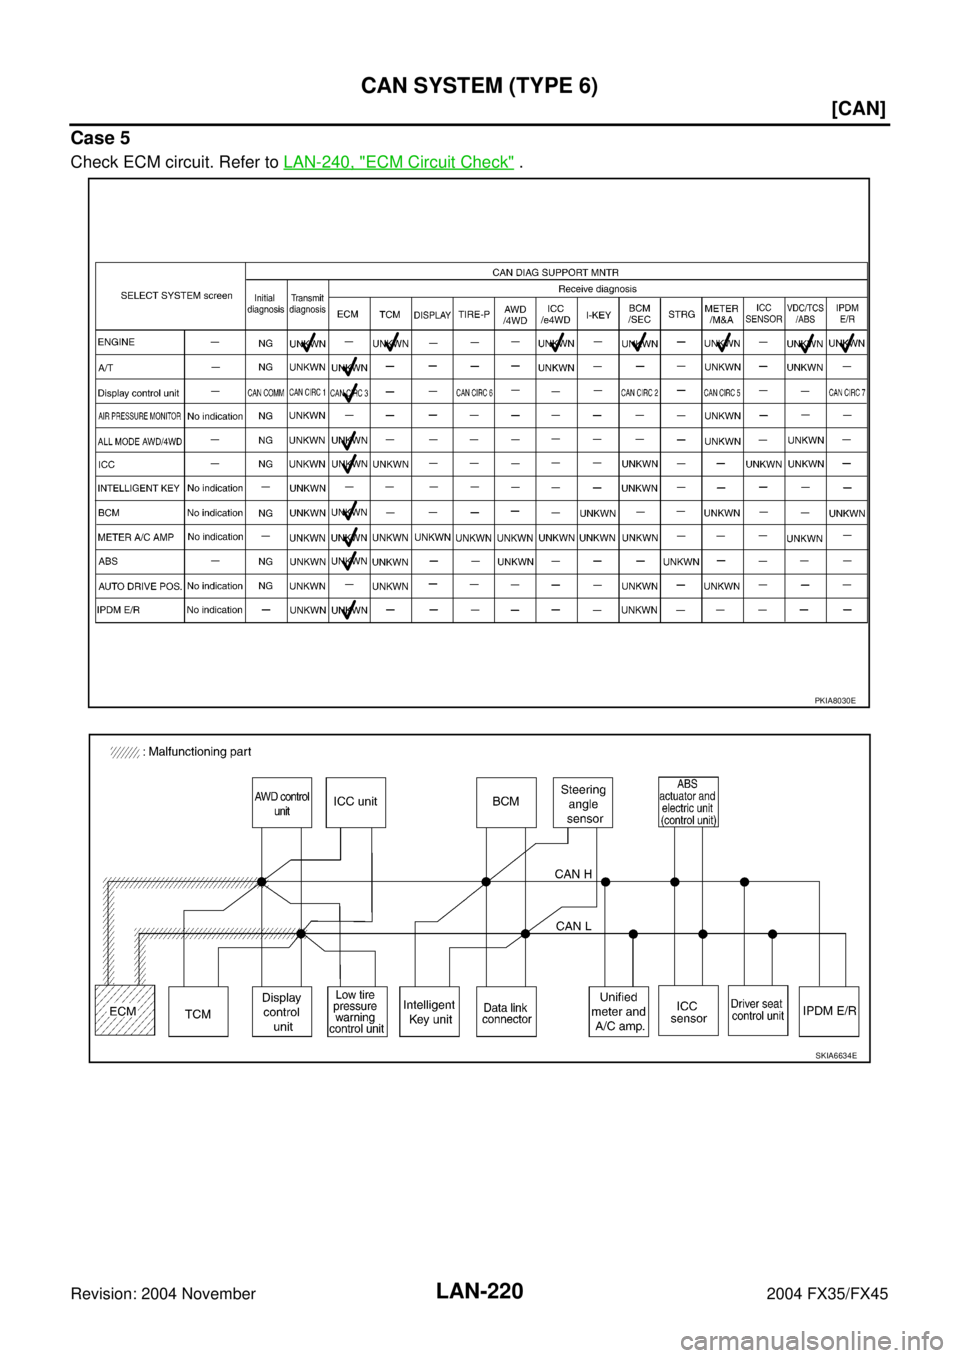 INFINITI FX35 2004  Service Manual LAN-220
[CAN]
CAN SYSTEM (TYPE 6)
Revision: 2004 November 2004 FX35/FX45
Case 5
Check ECM circuit. Refer to LAN-240, "ECM Circuit Check" .
PKIA8030E
SKIA6634E 